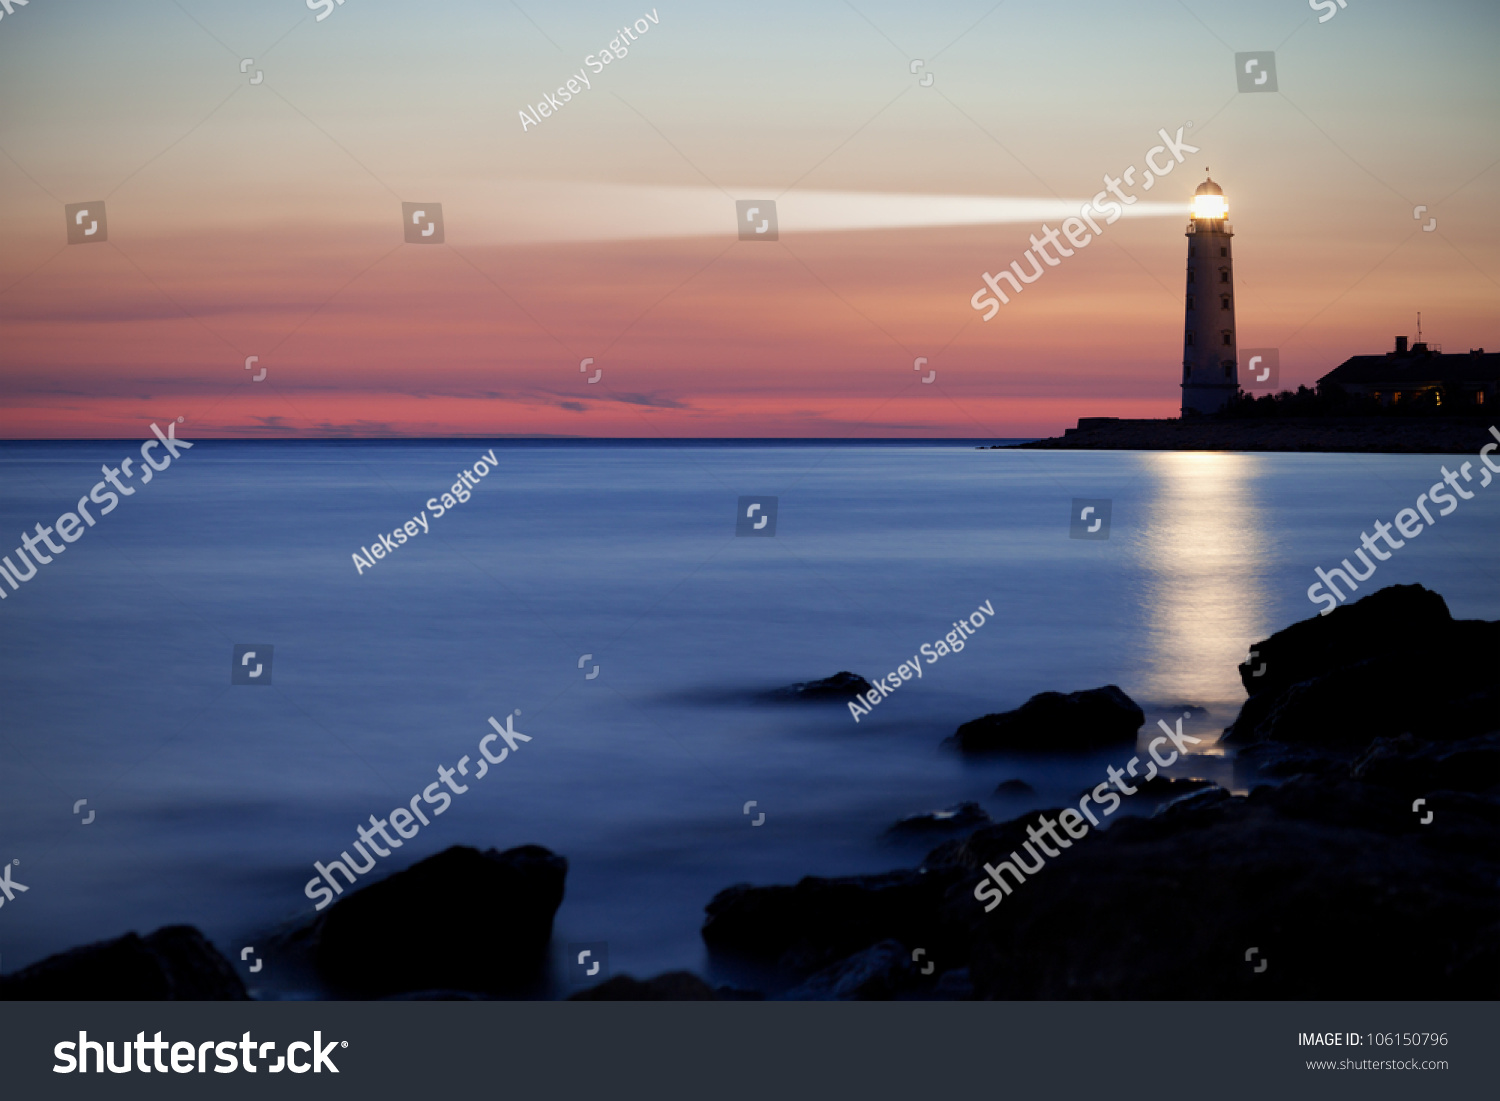 Seascape at sunset. Lighthouse on the coast #106150796